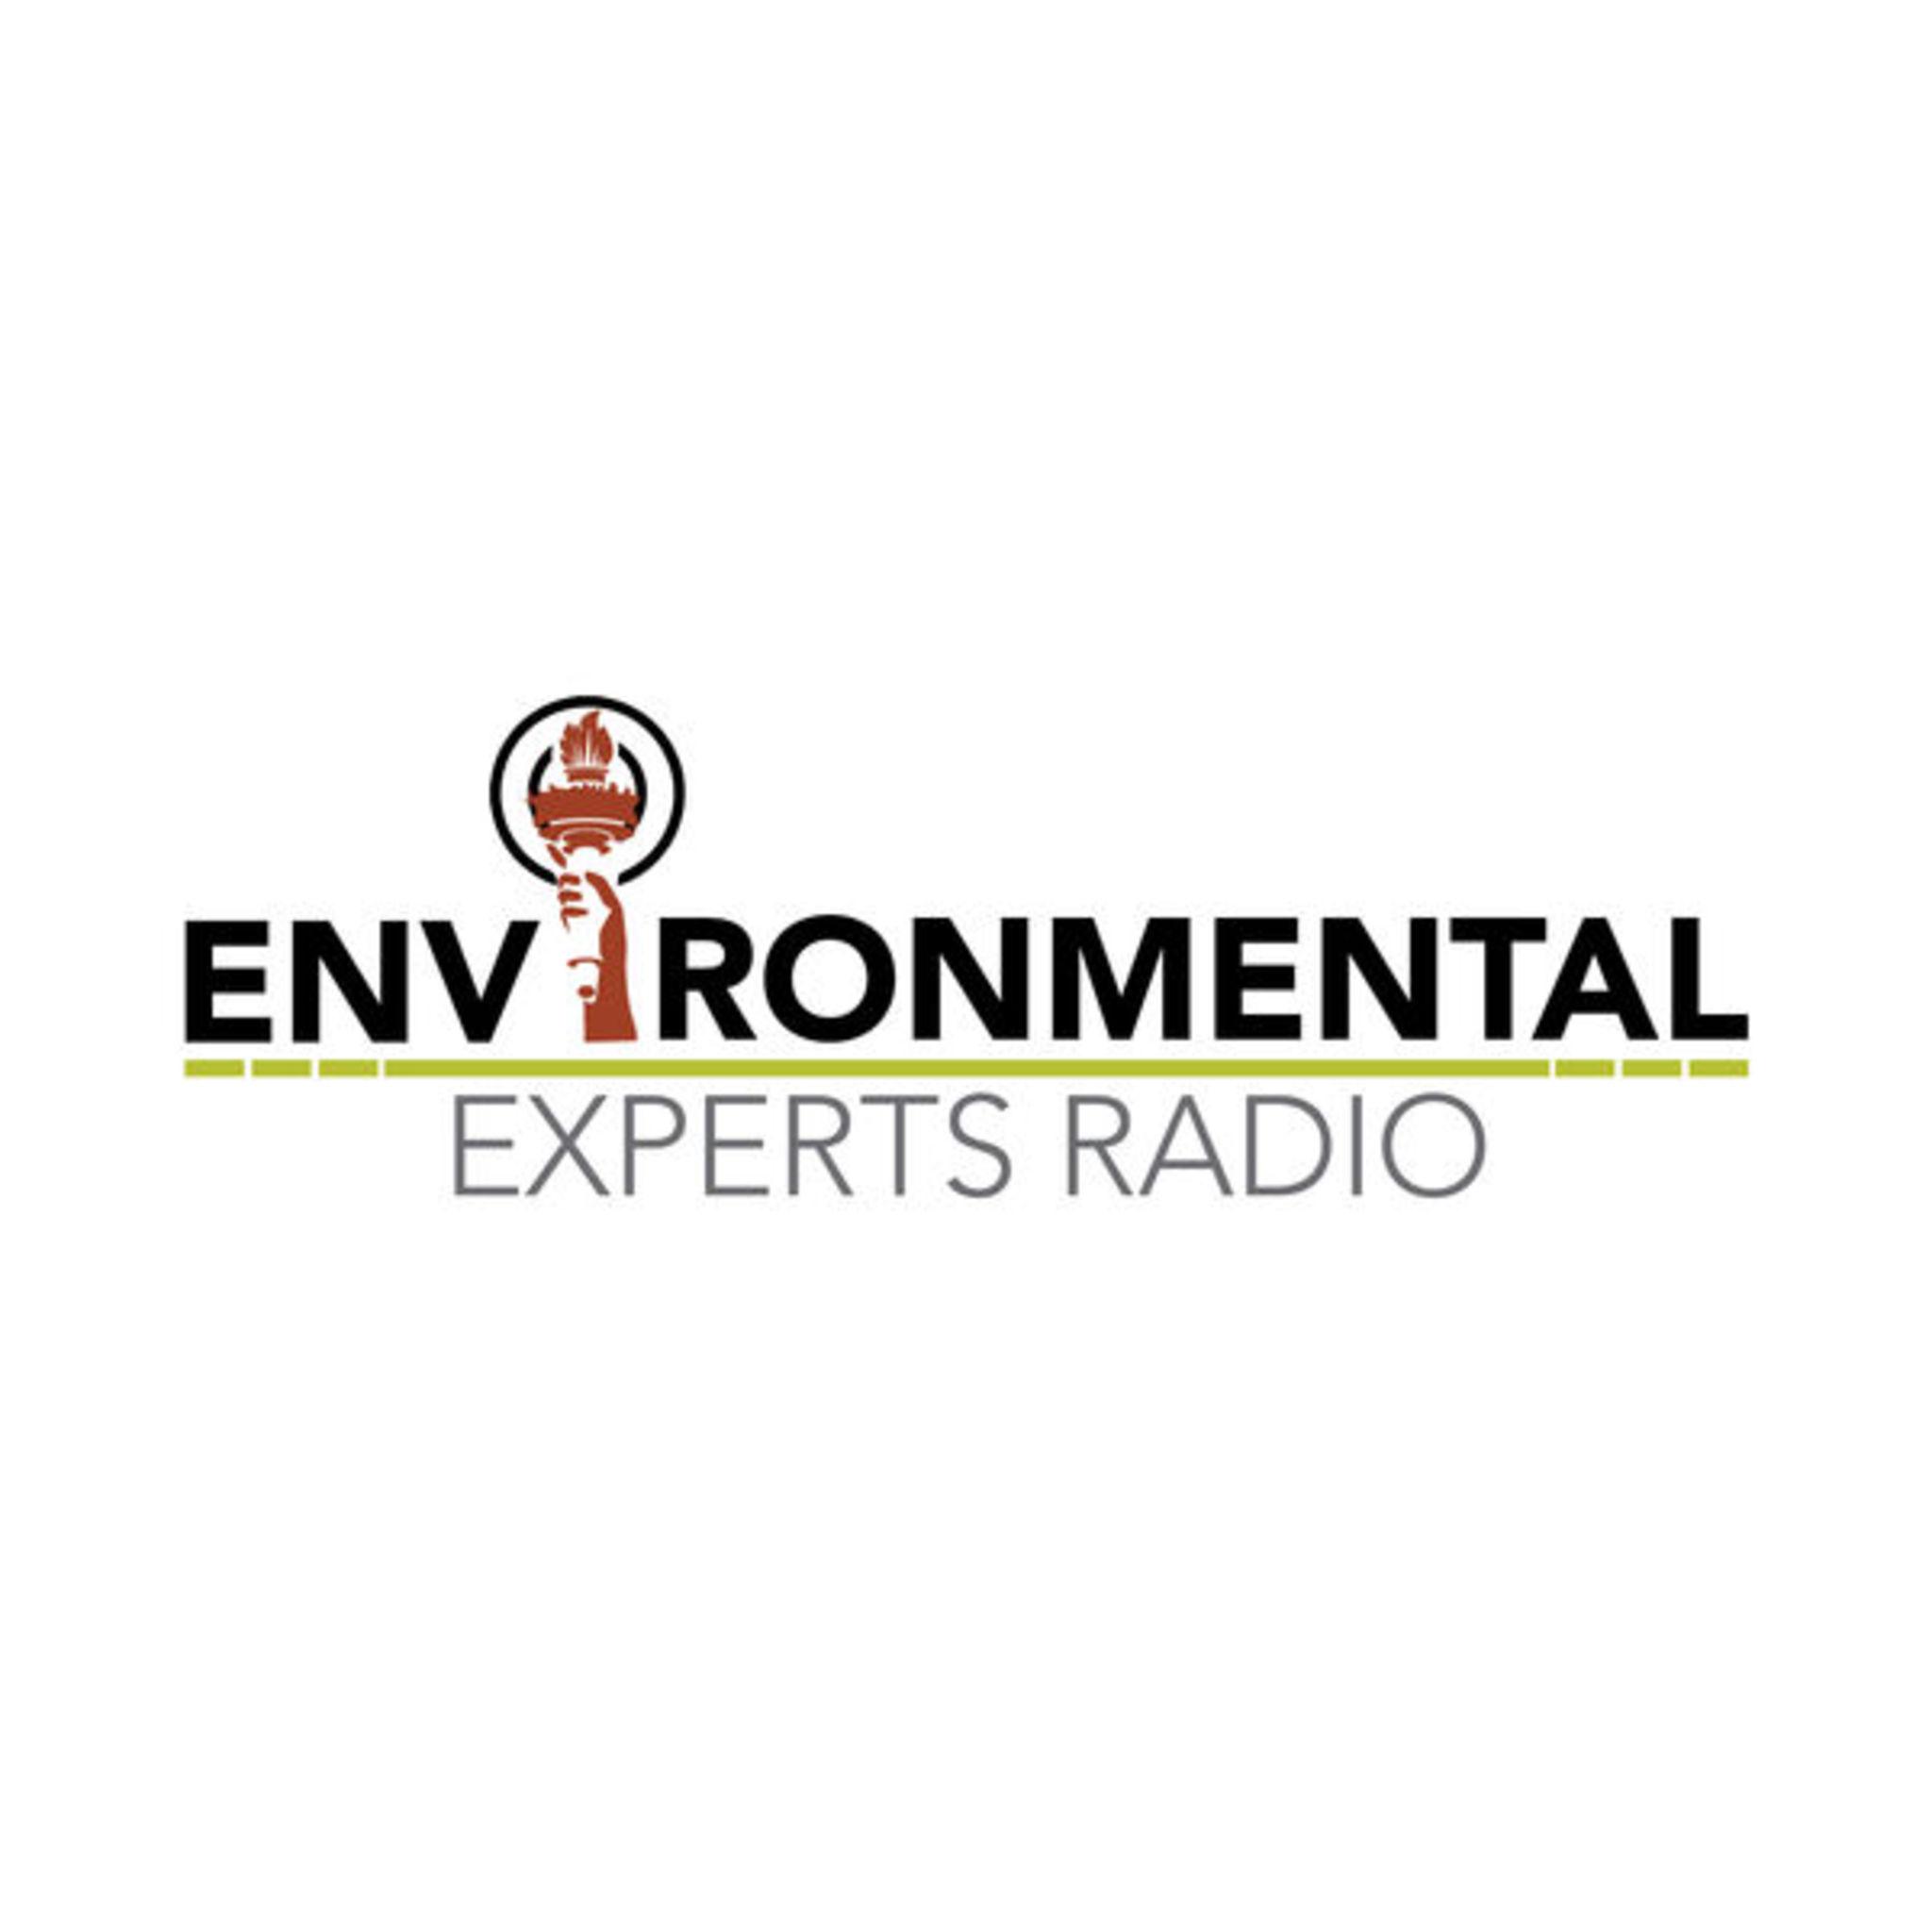 CERCLA Logo - Environmental Experts Radio Canal And The Origin Of CERCLA